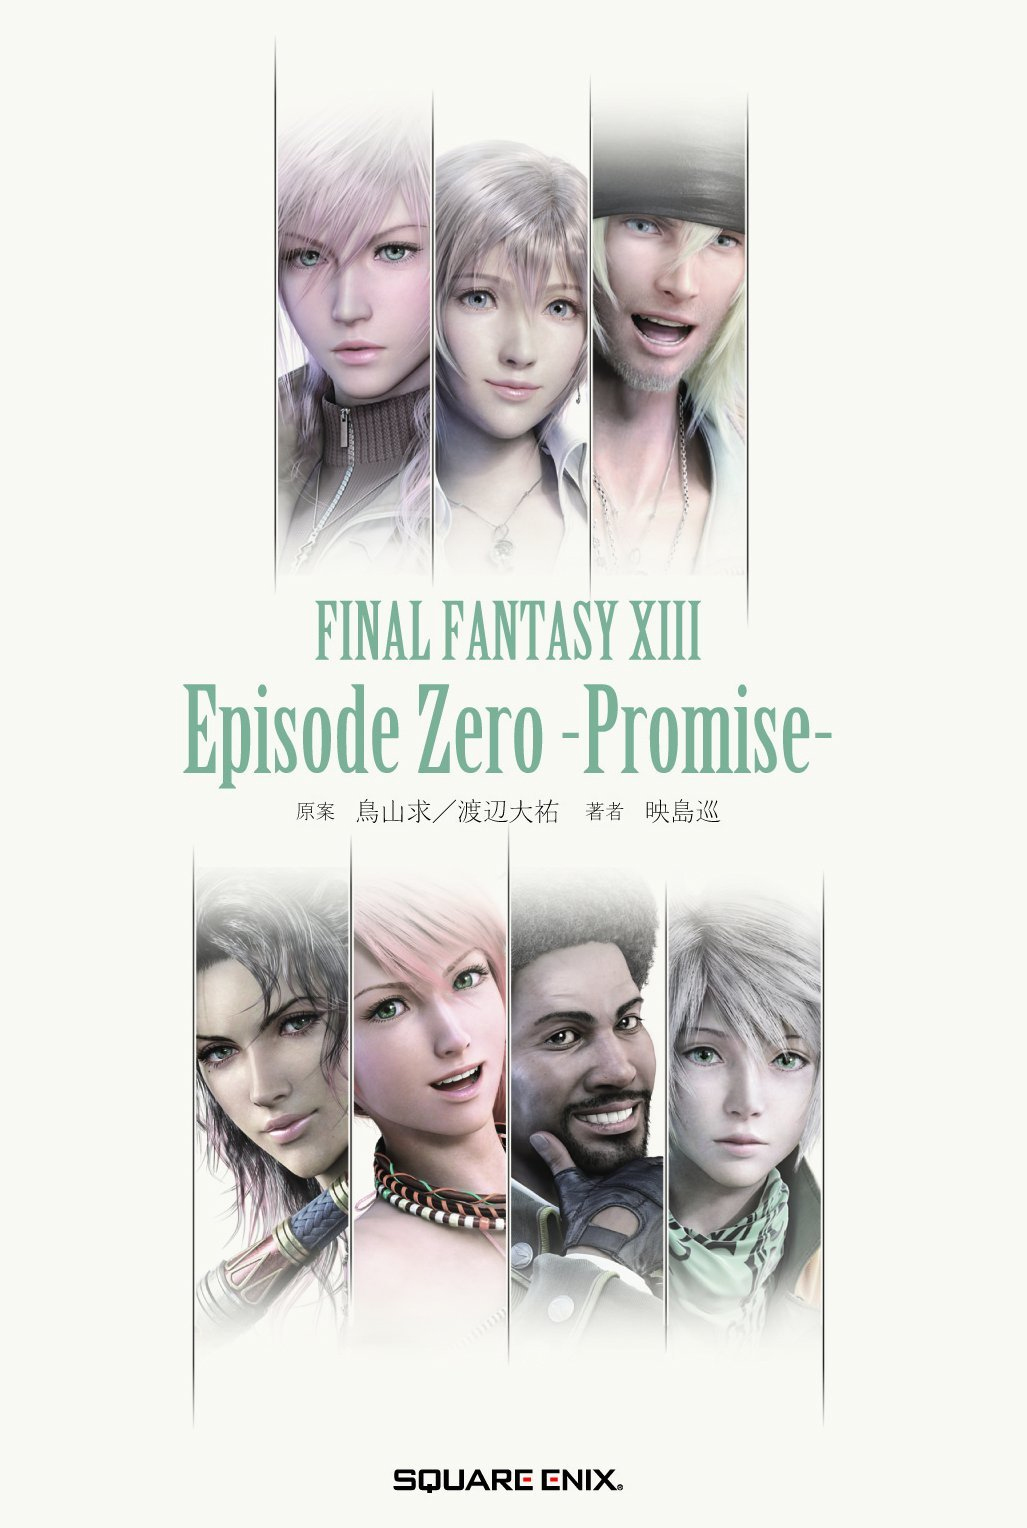 download final fantasy zero